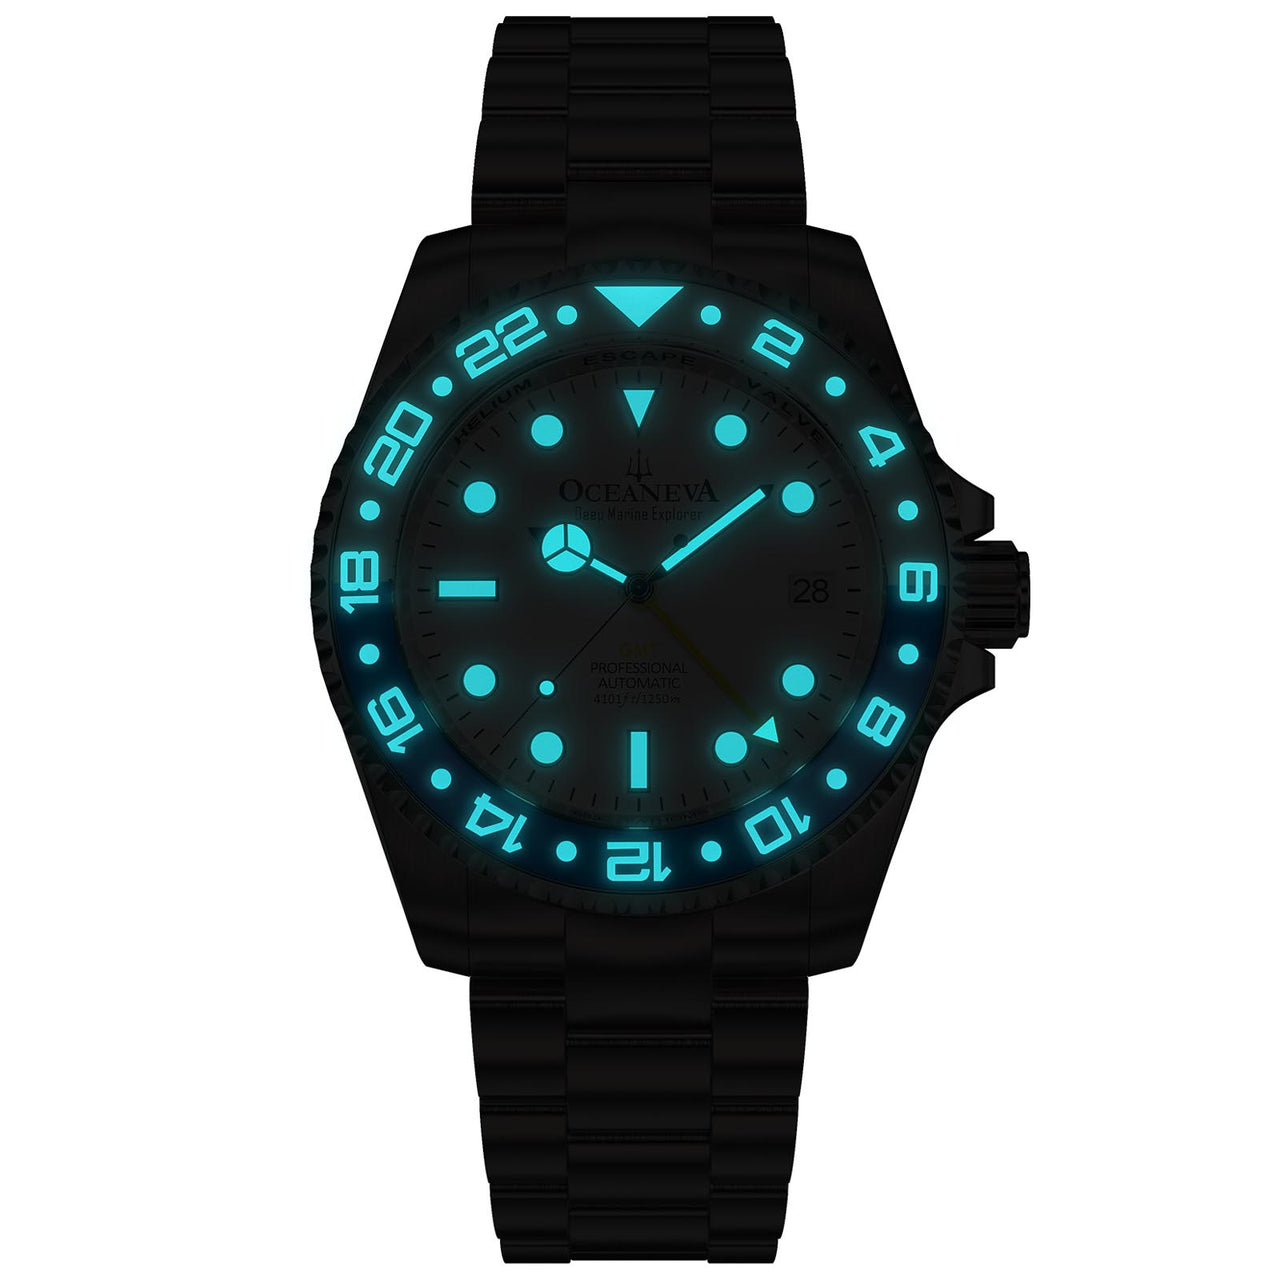 Showcasing Oceaneva Titanium Watch's full BGW9 Grade A Luminous bezel